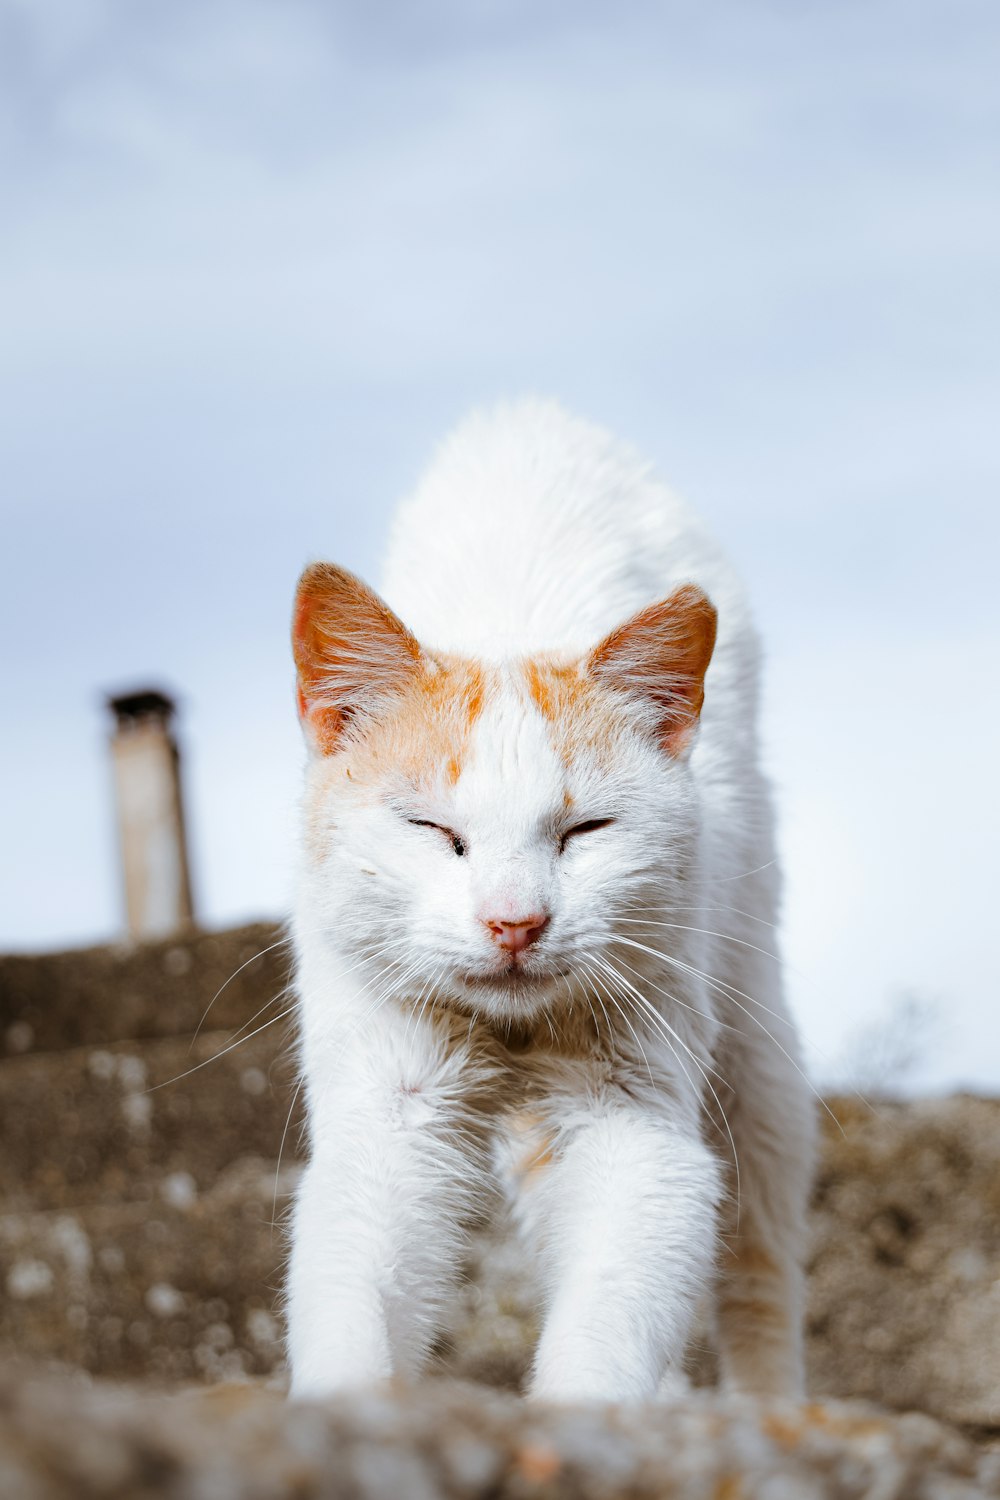 gato branco e laranja na superfície preta do concreto